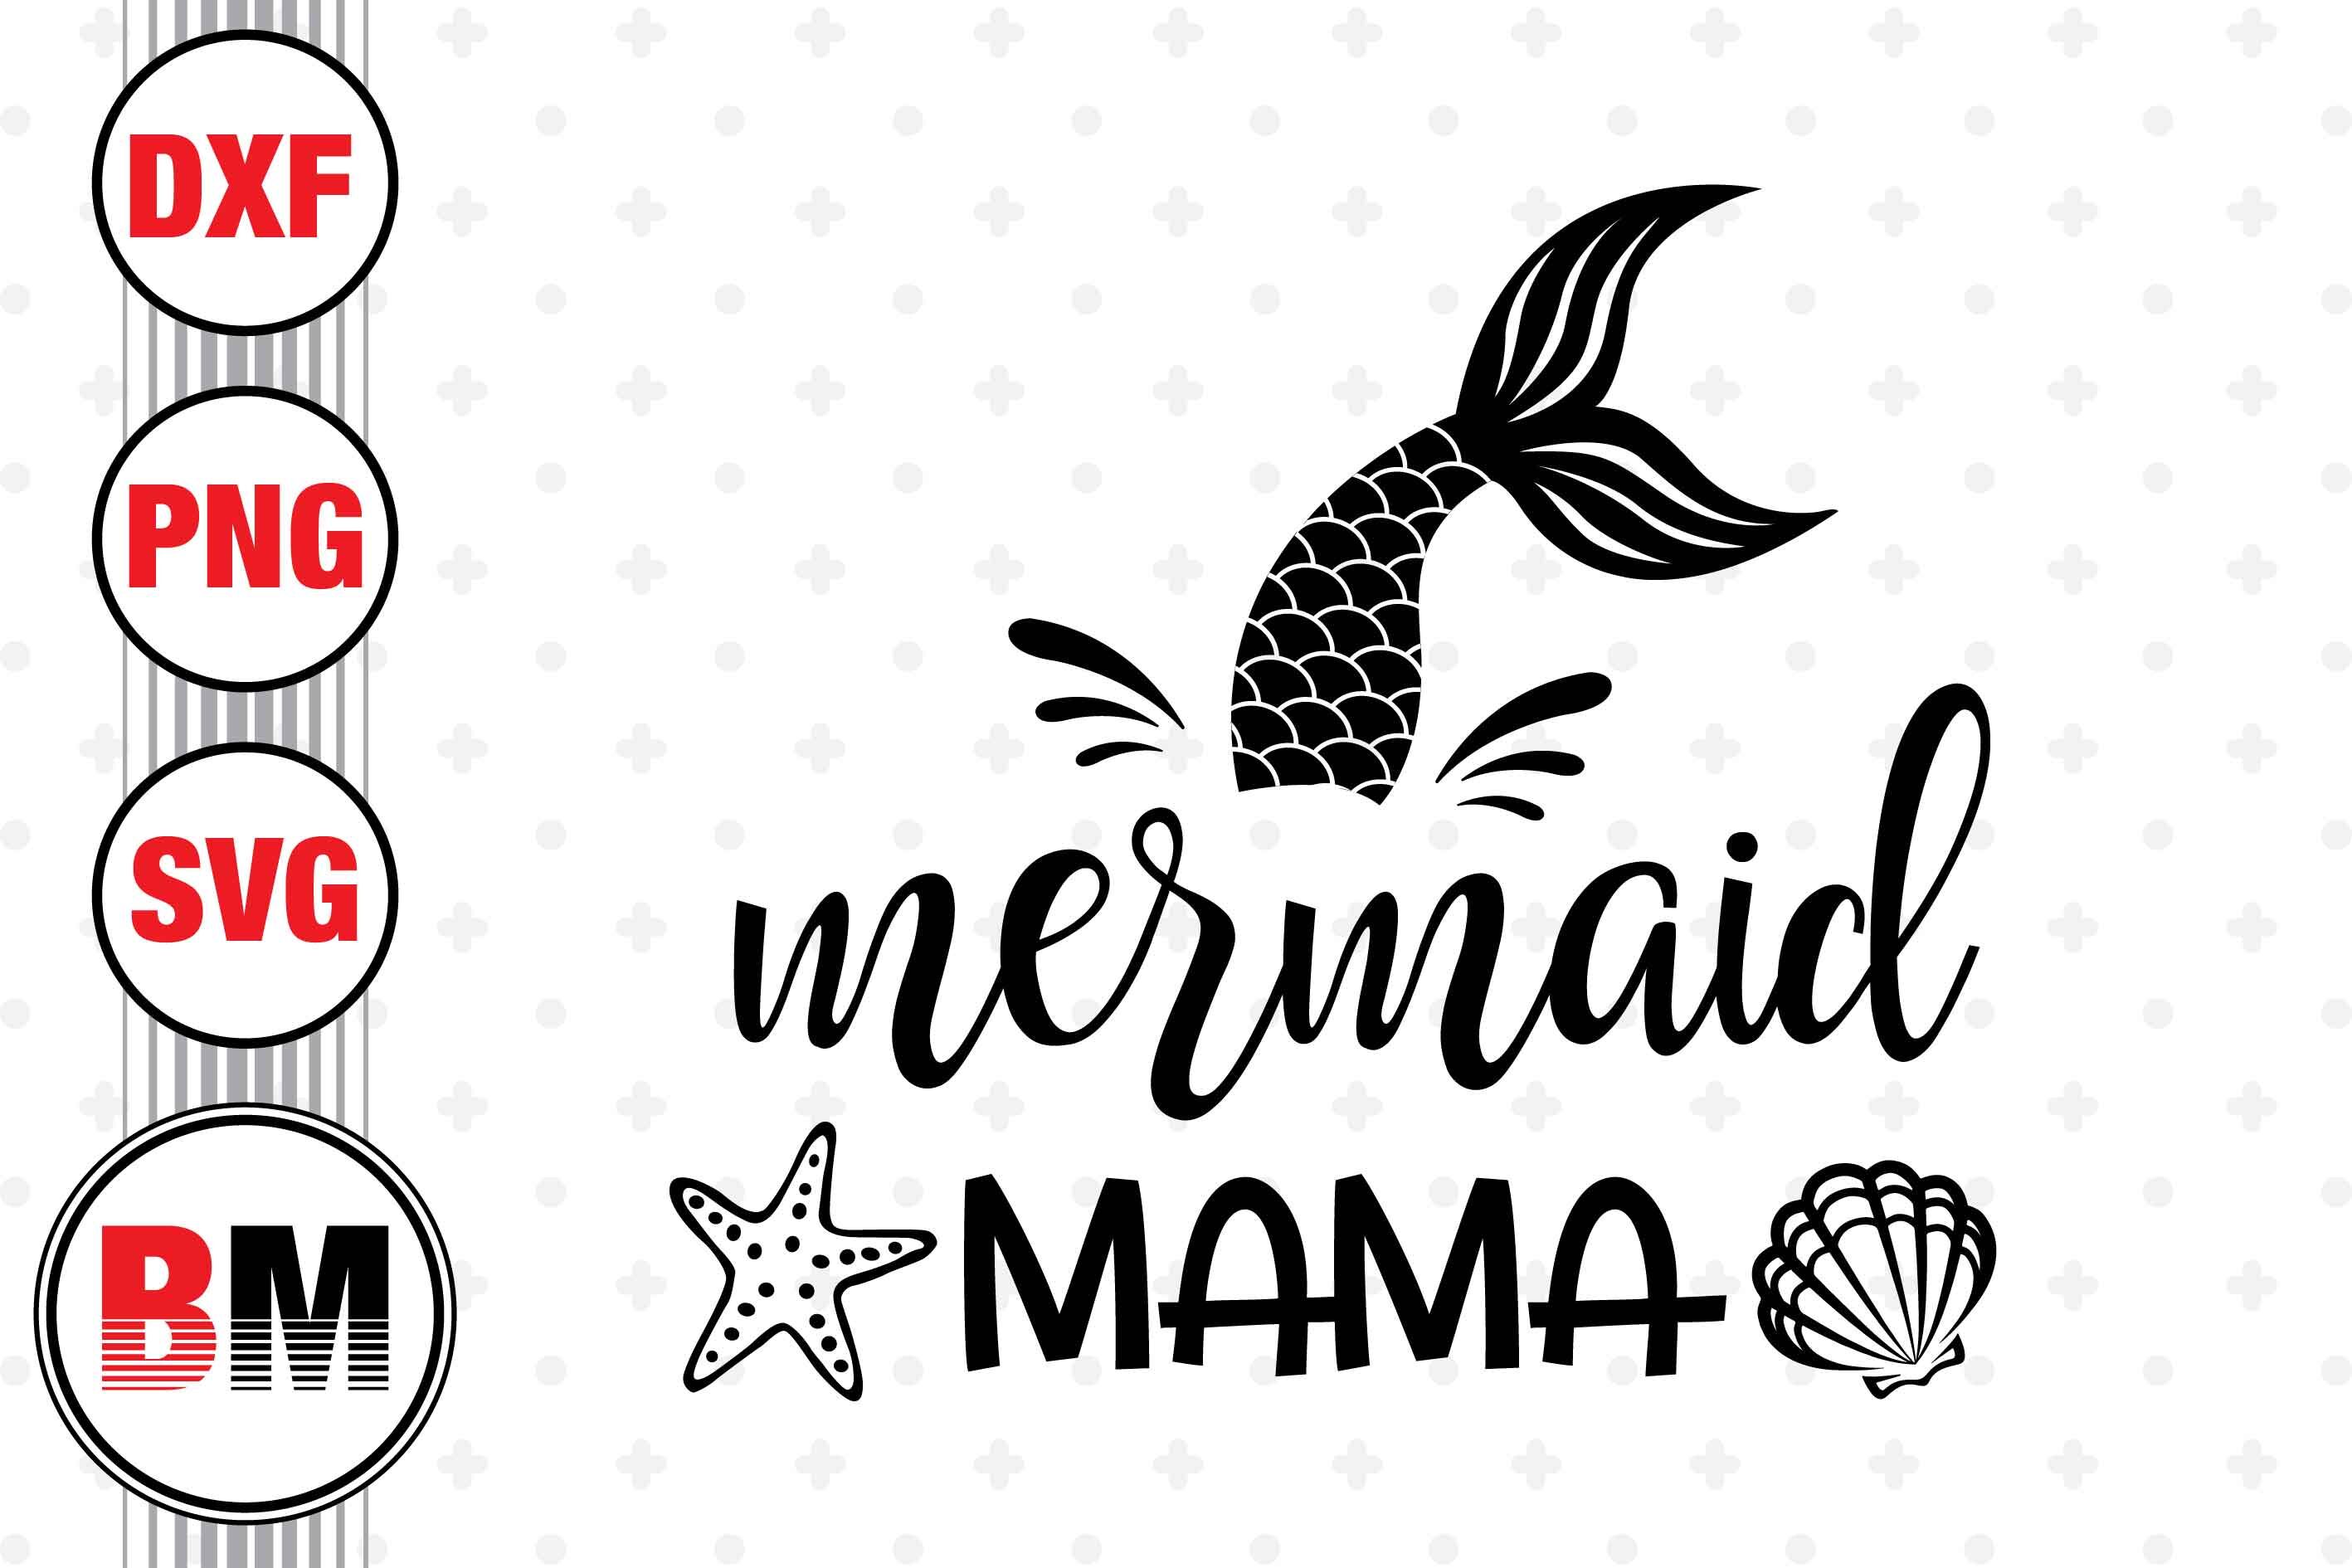 Mermaid Mama SVG, PNG, DXF Files By Bmdesign | TheHungryJPEG